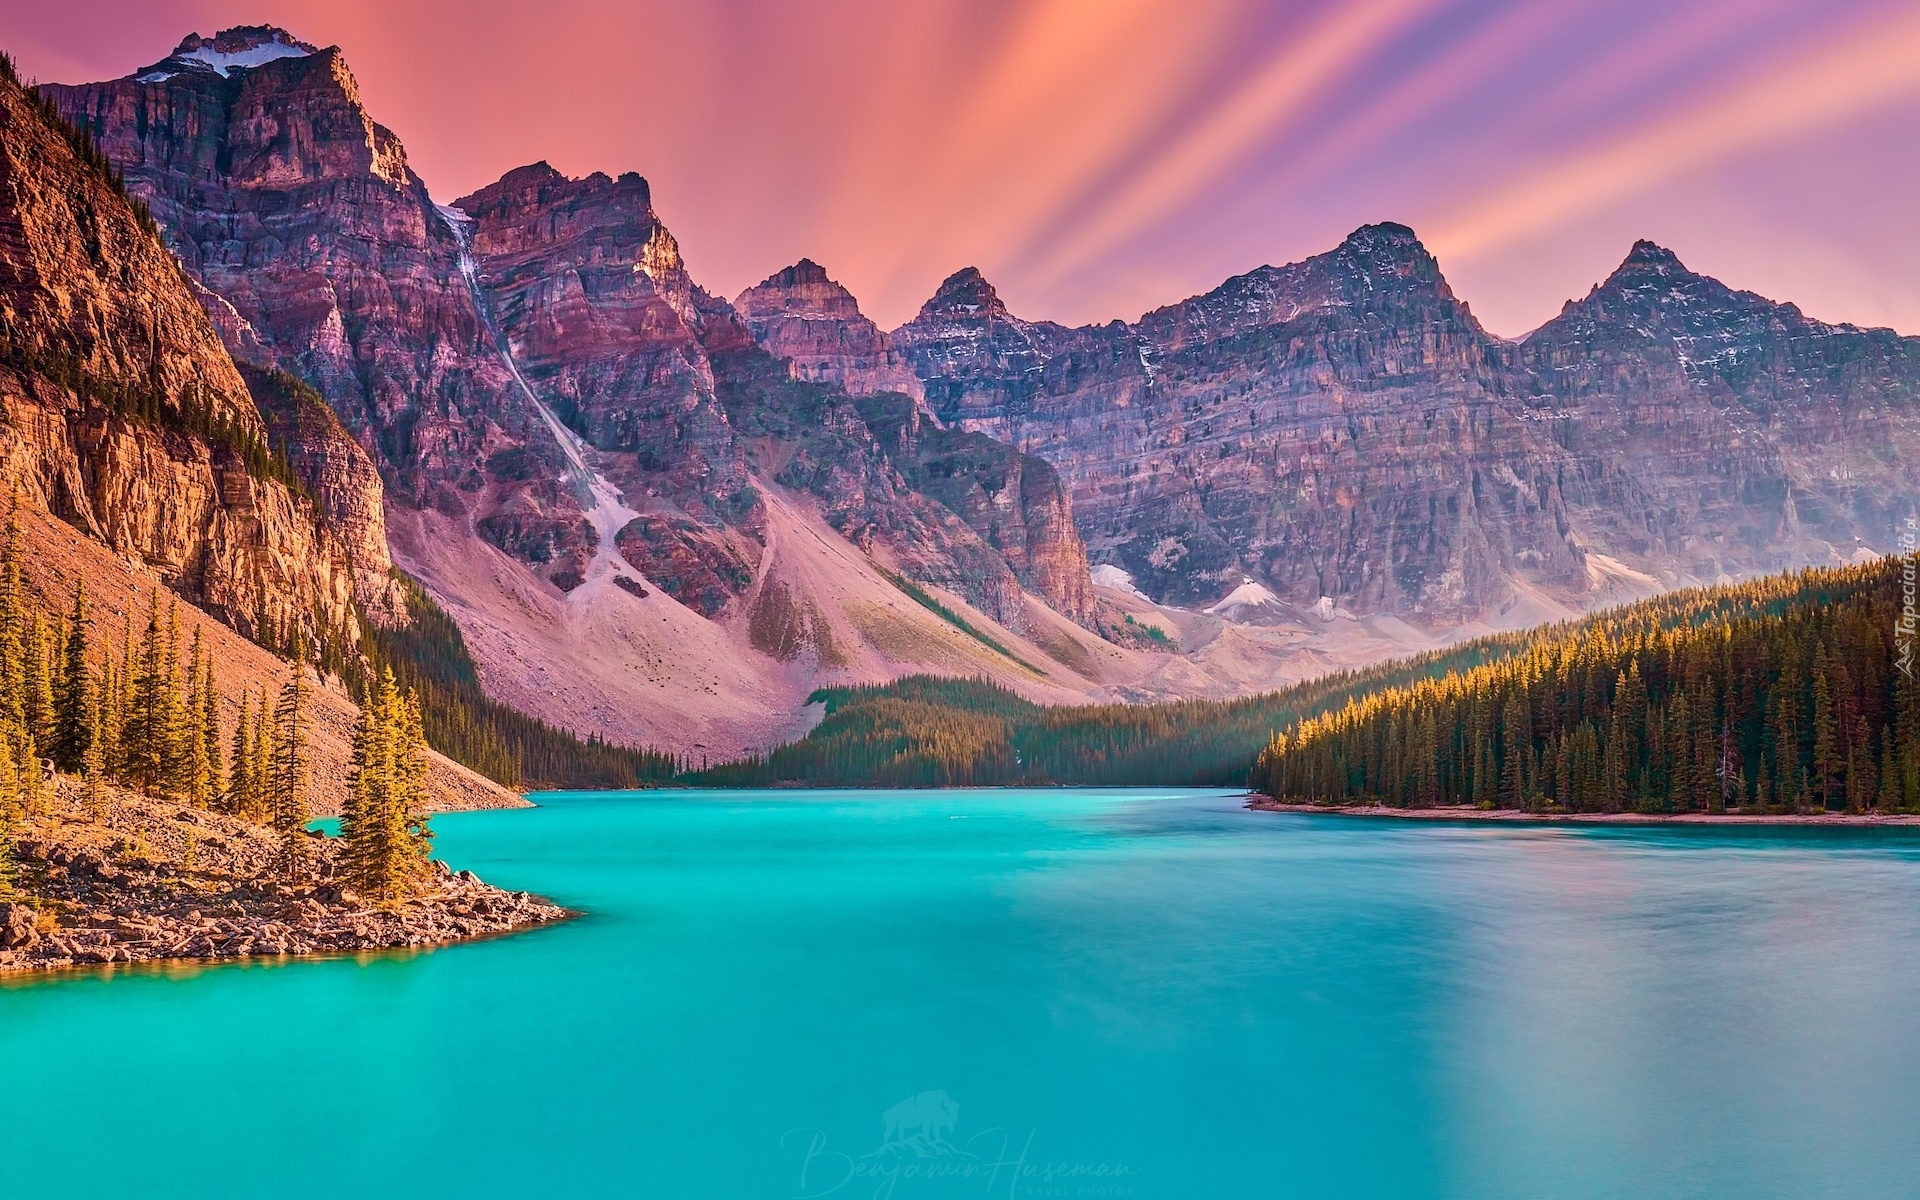 Kanada, Alberta, Park Narodowy Banff, Góry, Jezioro, Moraine Lake, Lasy